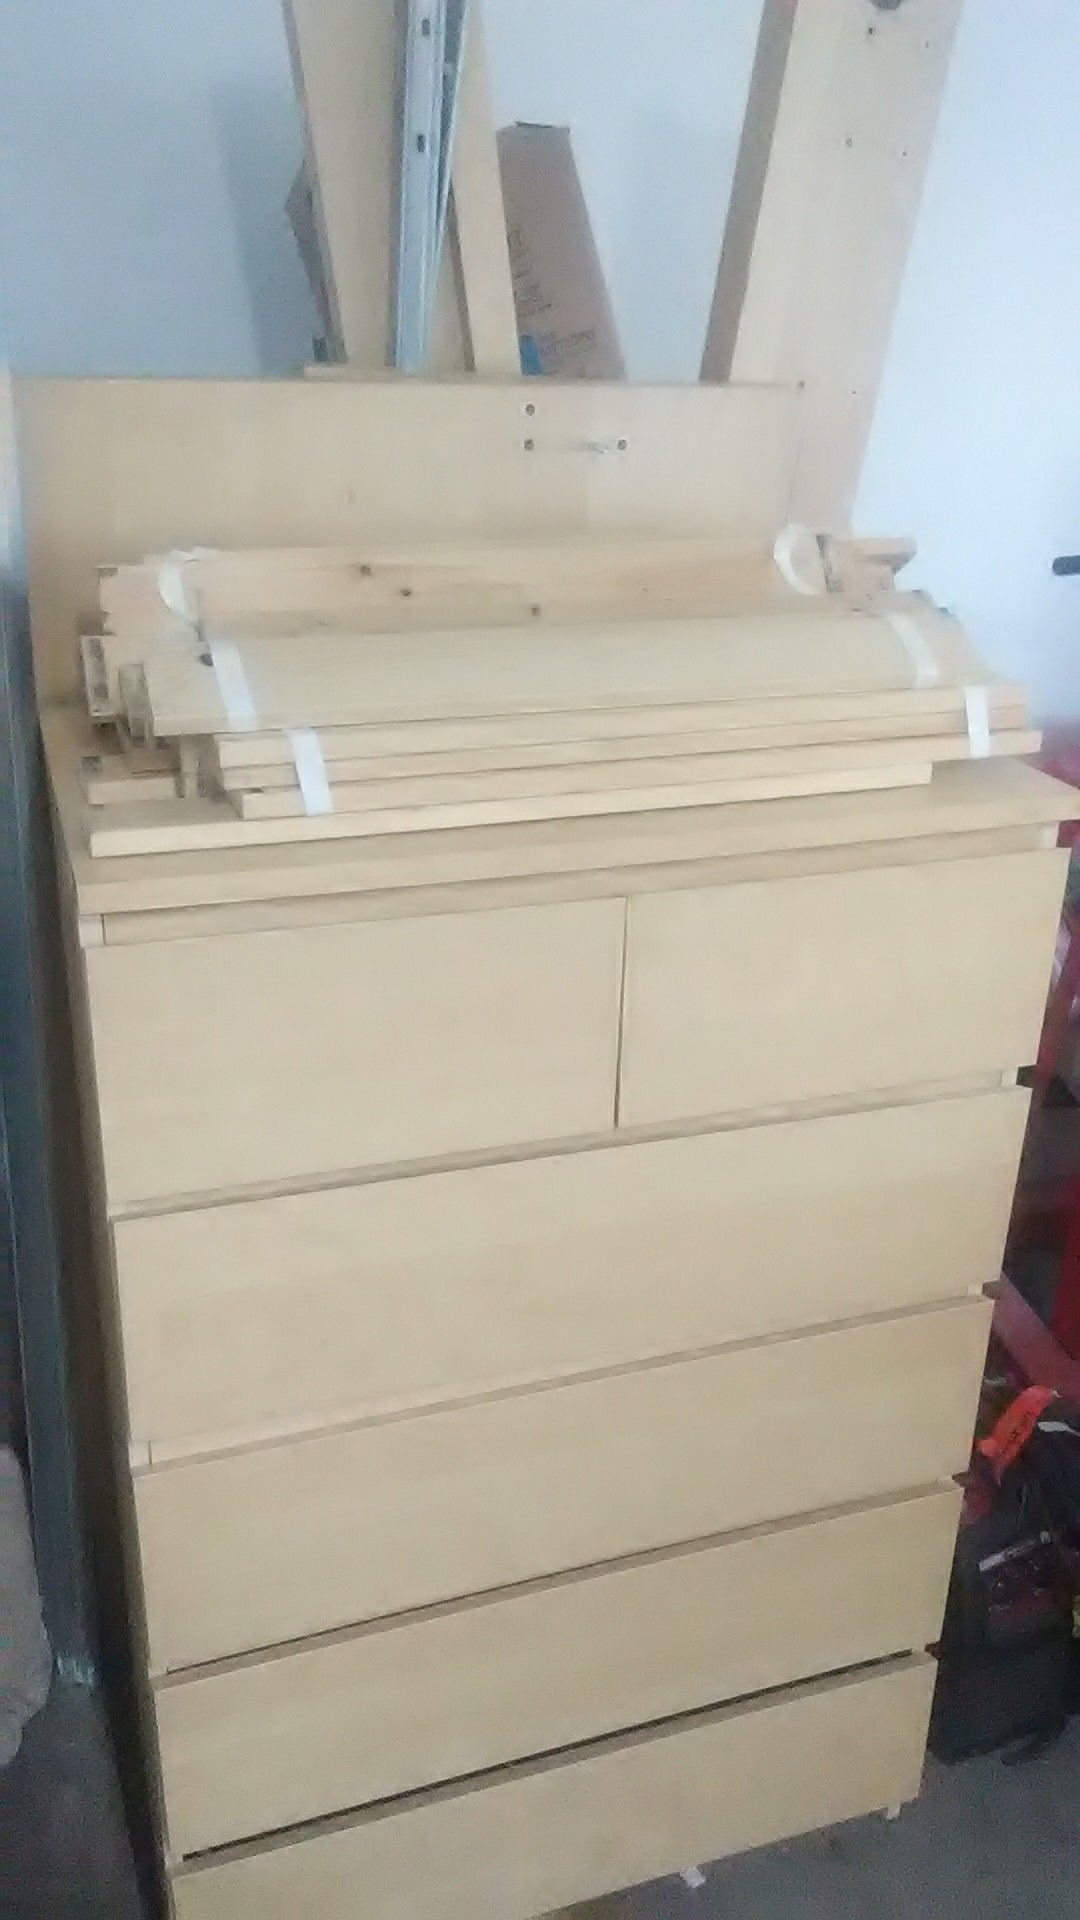 Ikea bedroom set